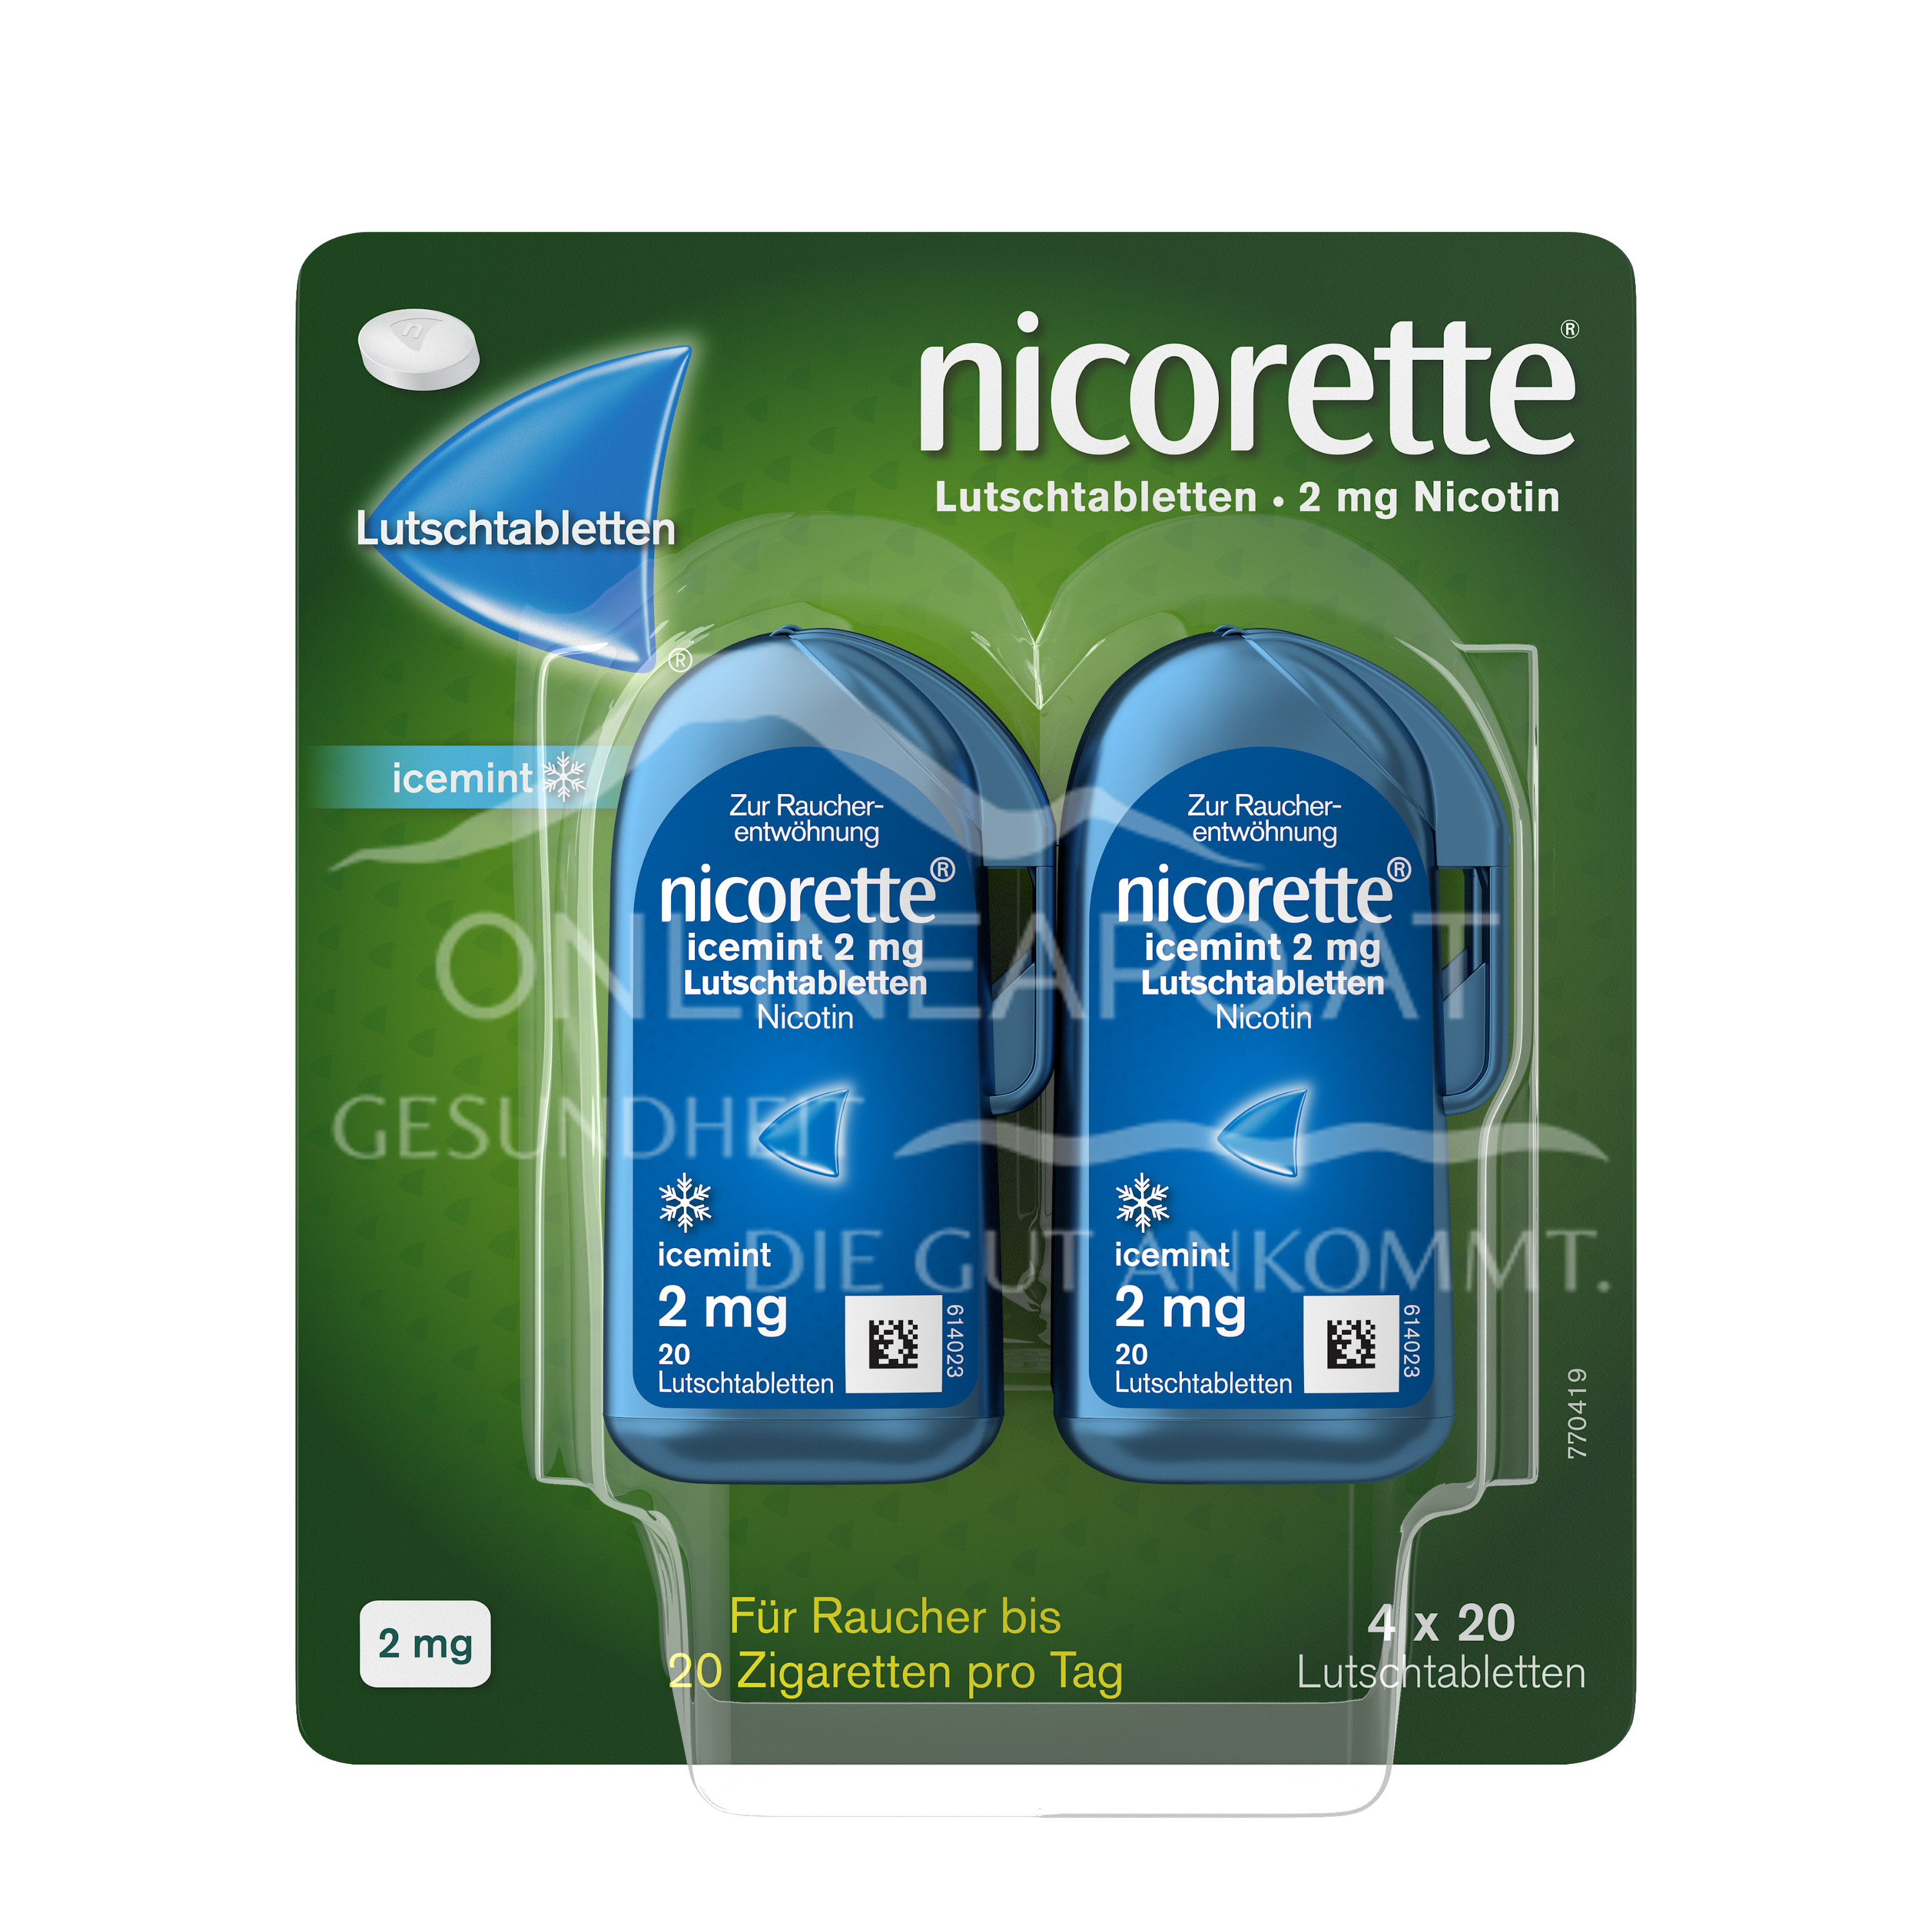 Nicorette Icemint 2 mg Lutschtabletten